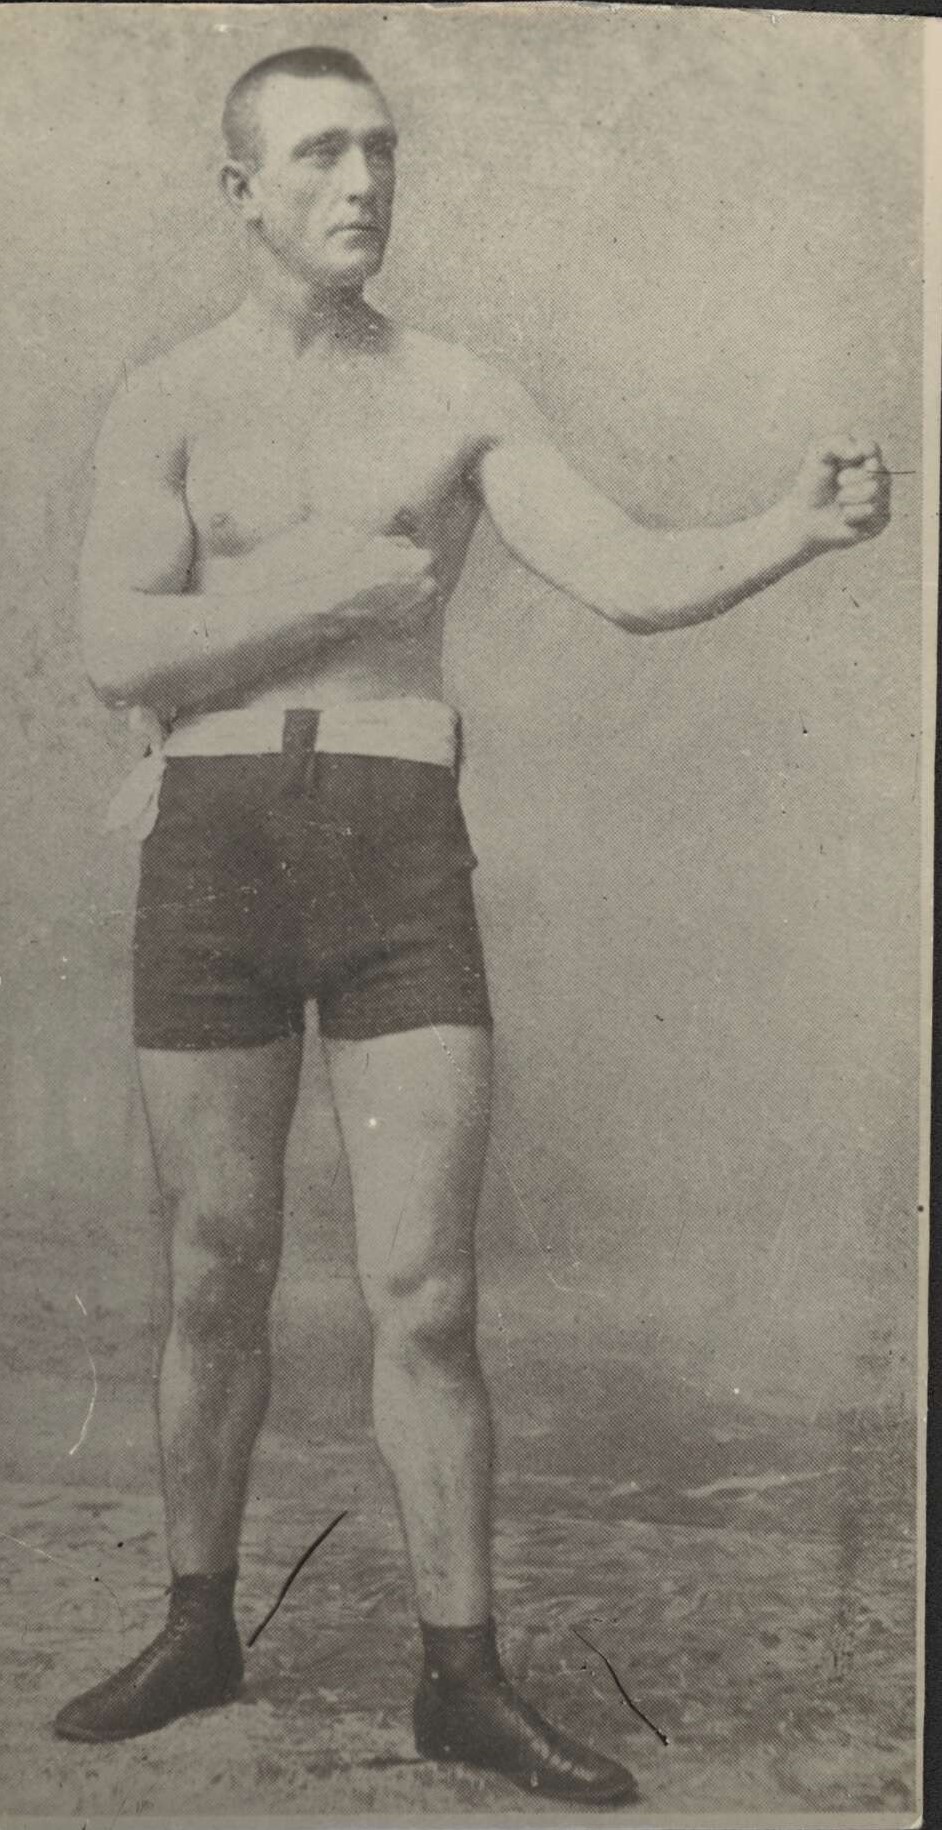 Photograph of boxer Charlie Dunn